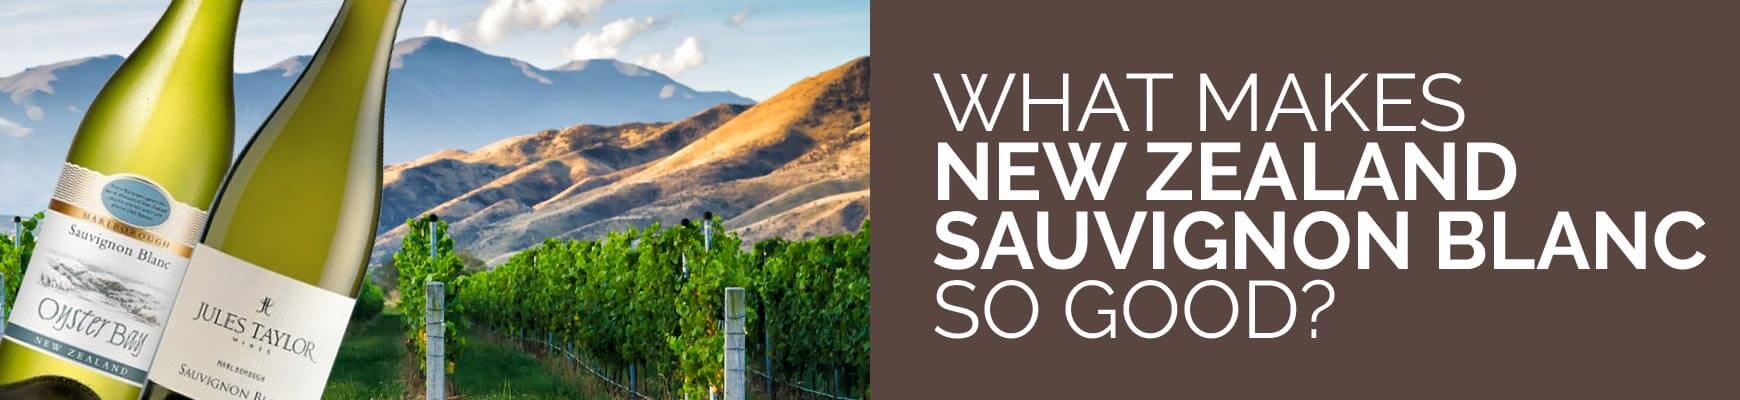 What Makes New Zealand Sauvignon Blanc So Good?